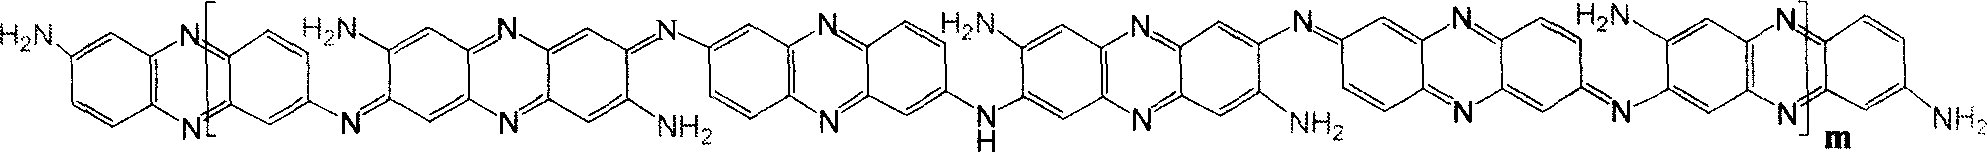 Poly (m-phenylene diamine) used as mercury ion adsorbent